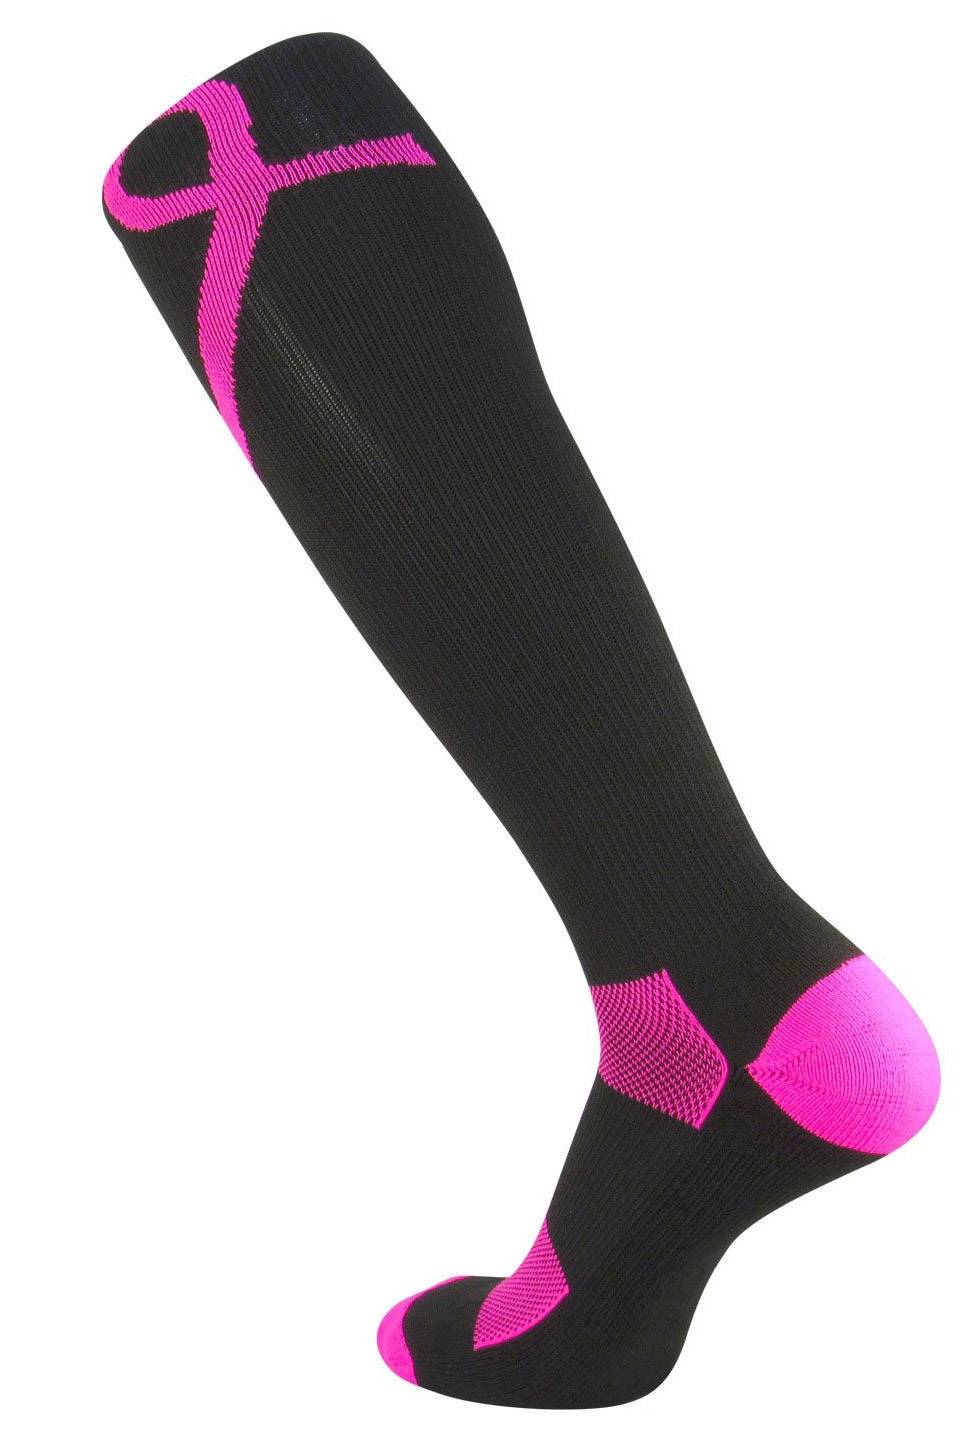 TCK Pink Ribbon Awareness Over The Calf Socks 